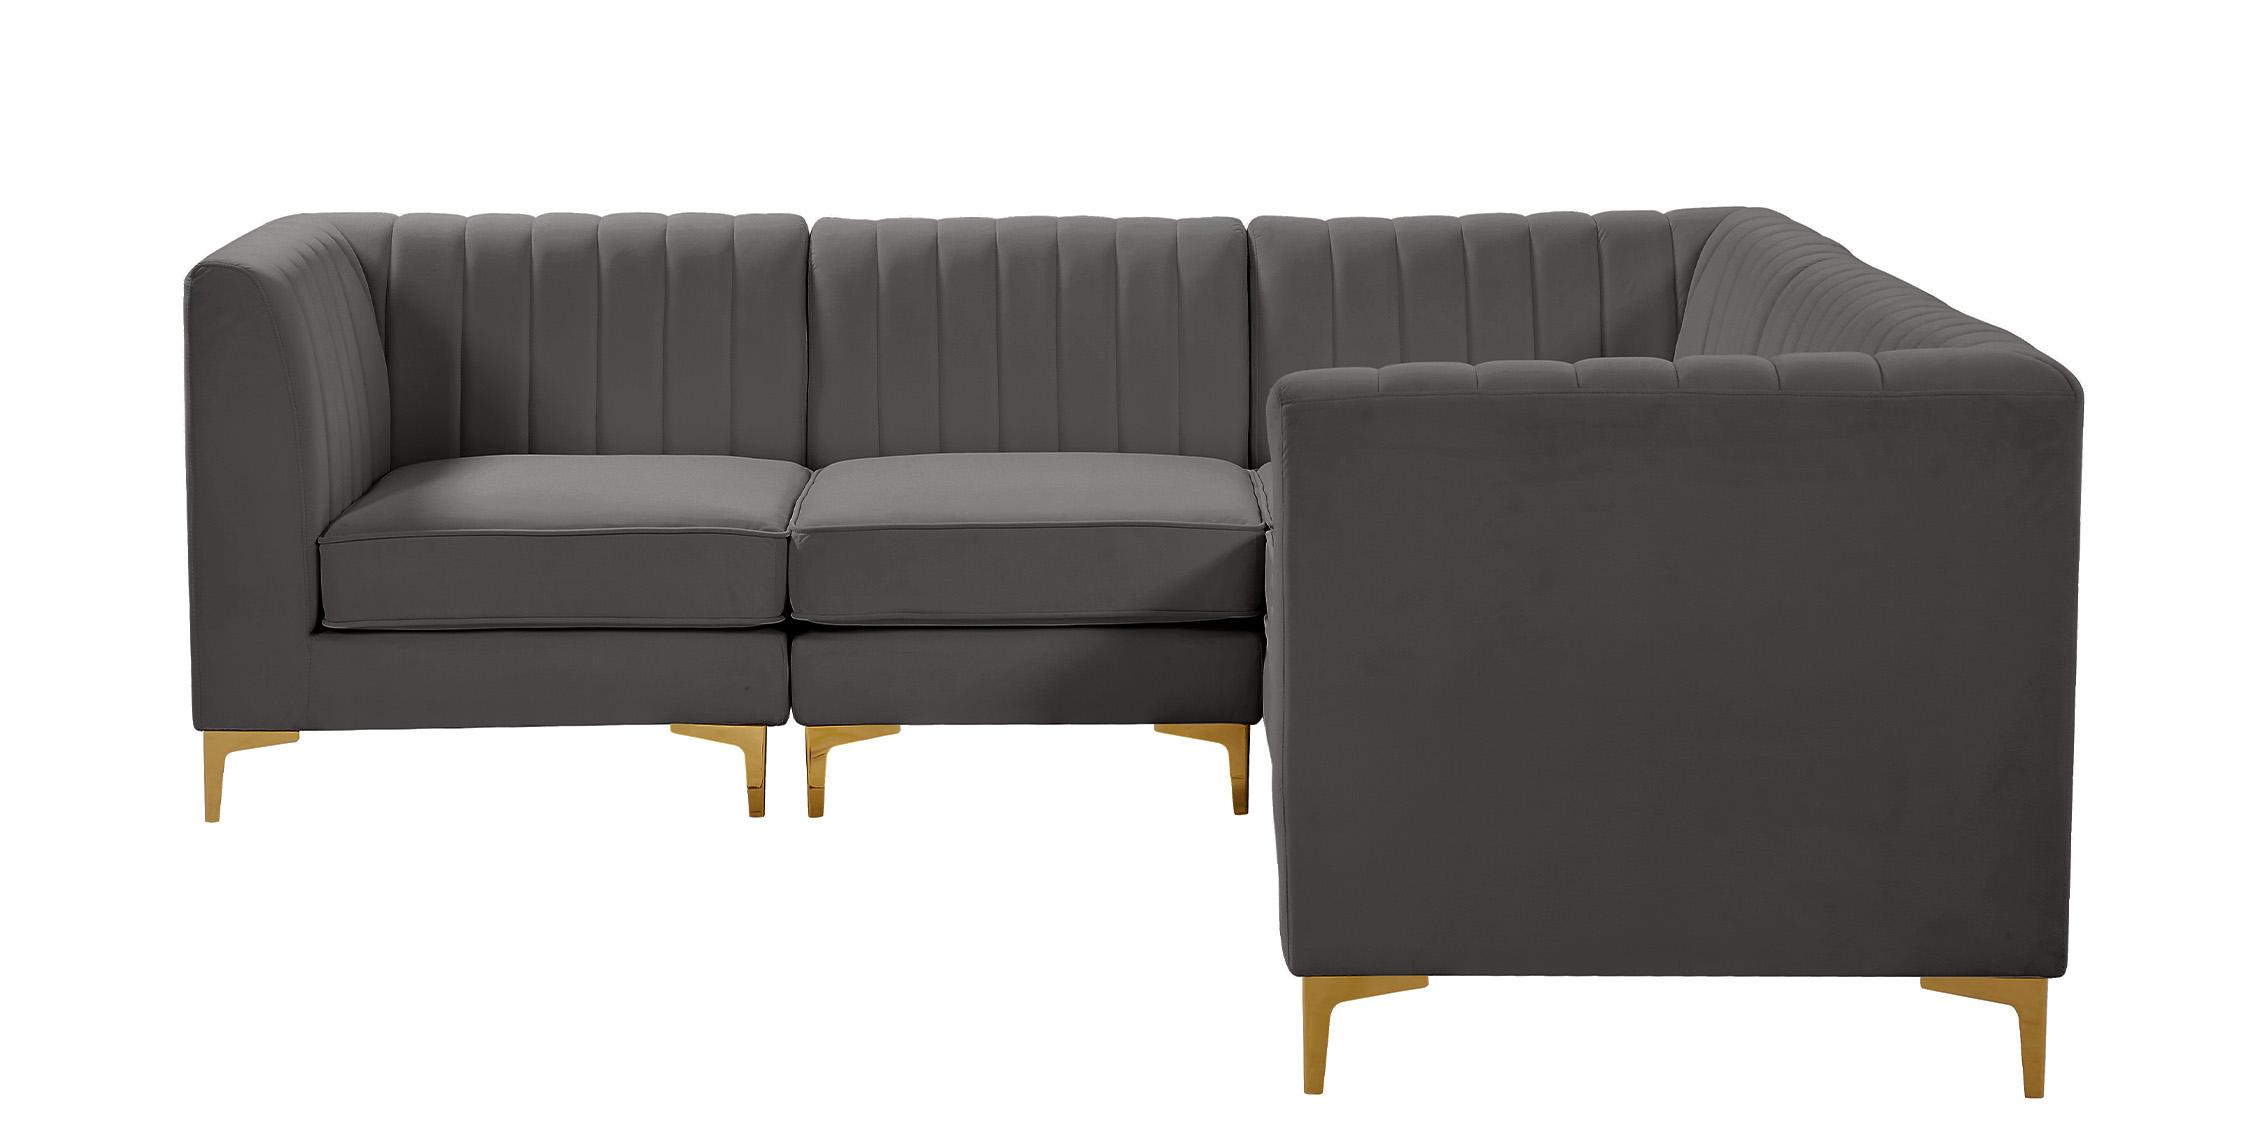 

    
Meridian Furniture ALINA 604Grey-Sec5C Modular Sectional Sofa Gray 604Grey-Sec5C
